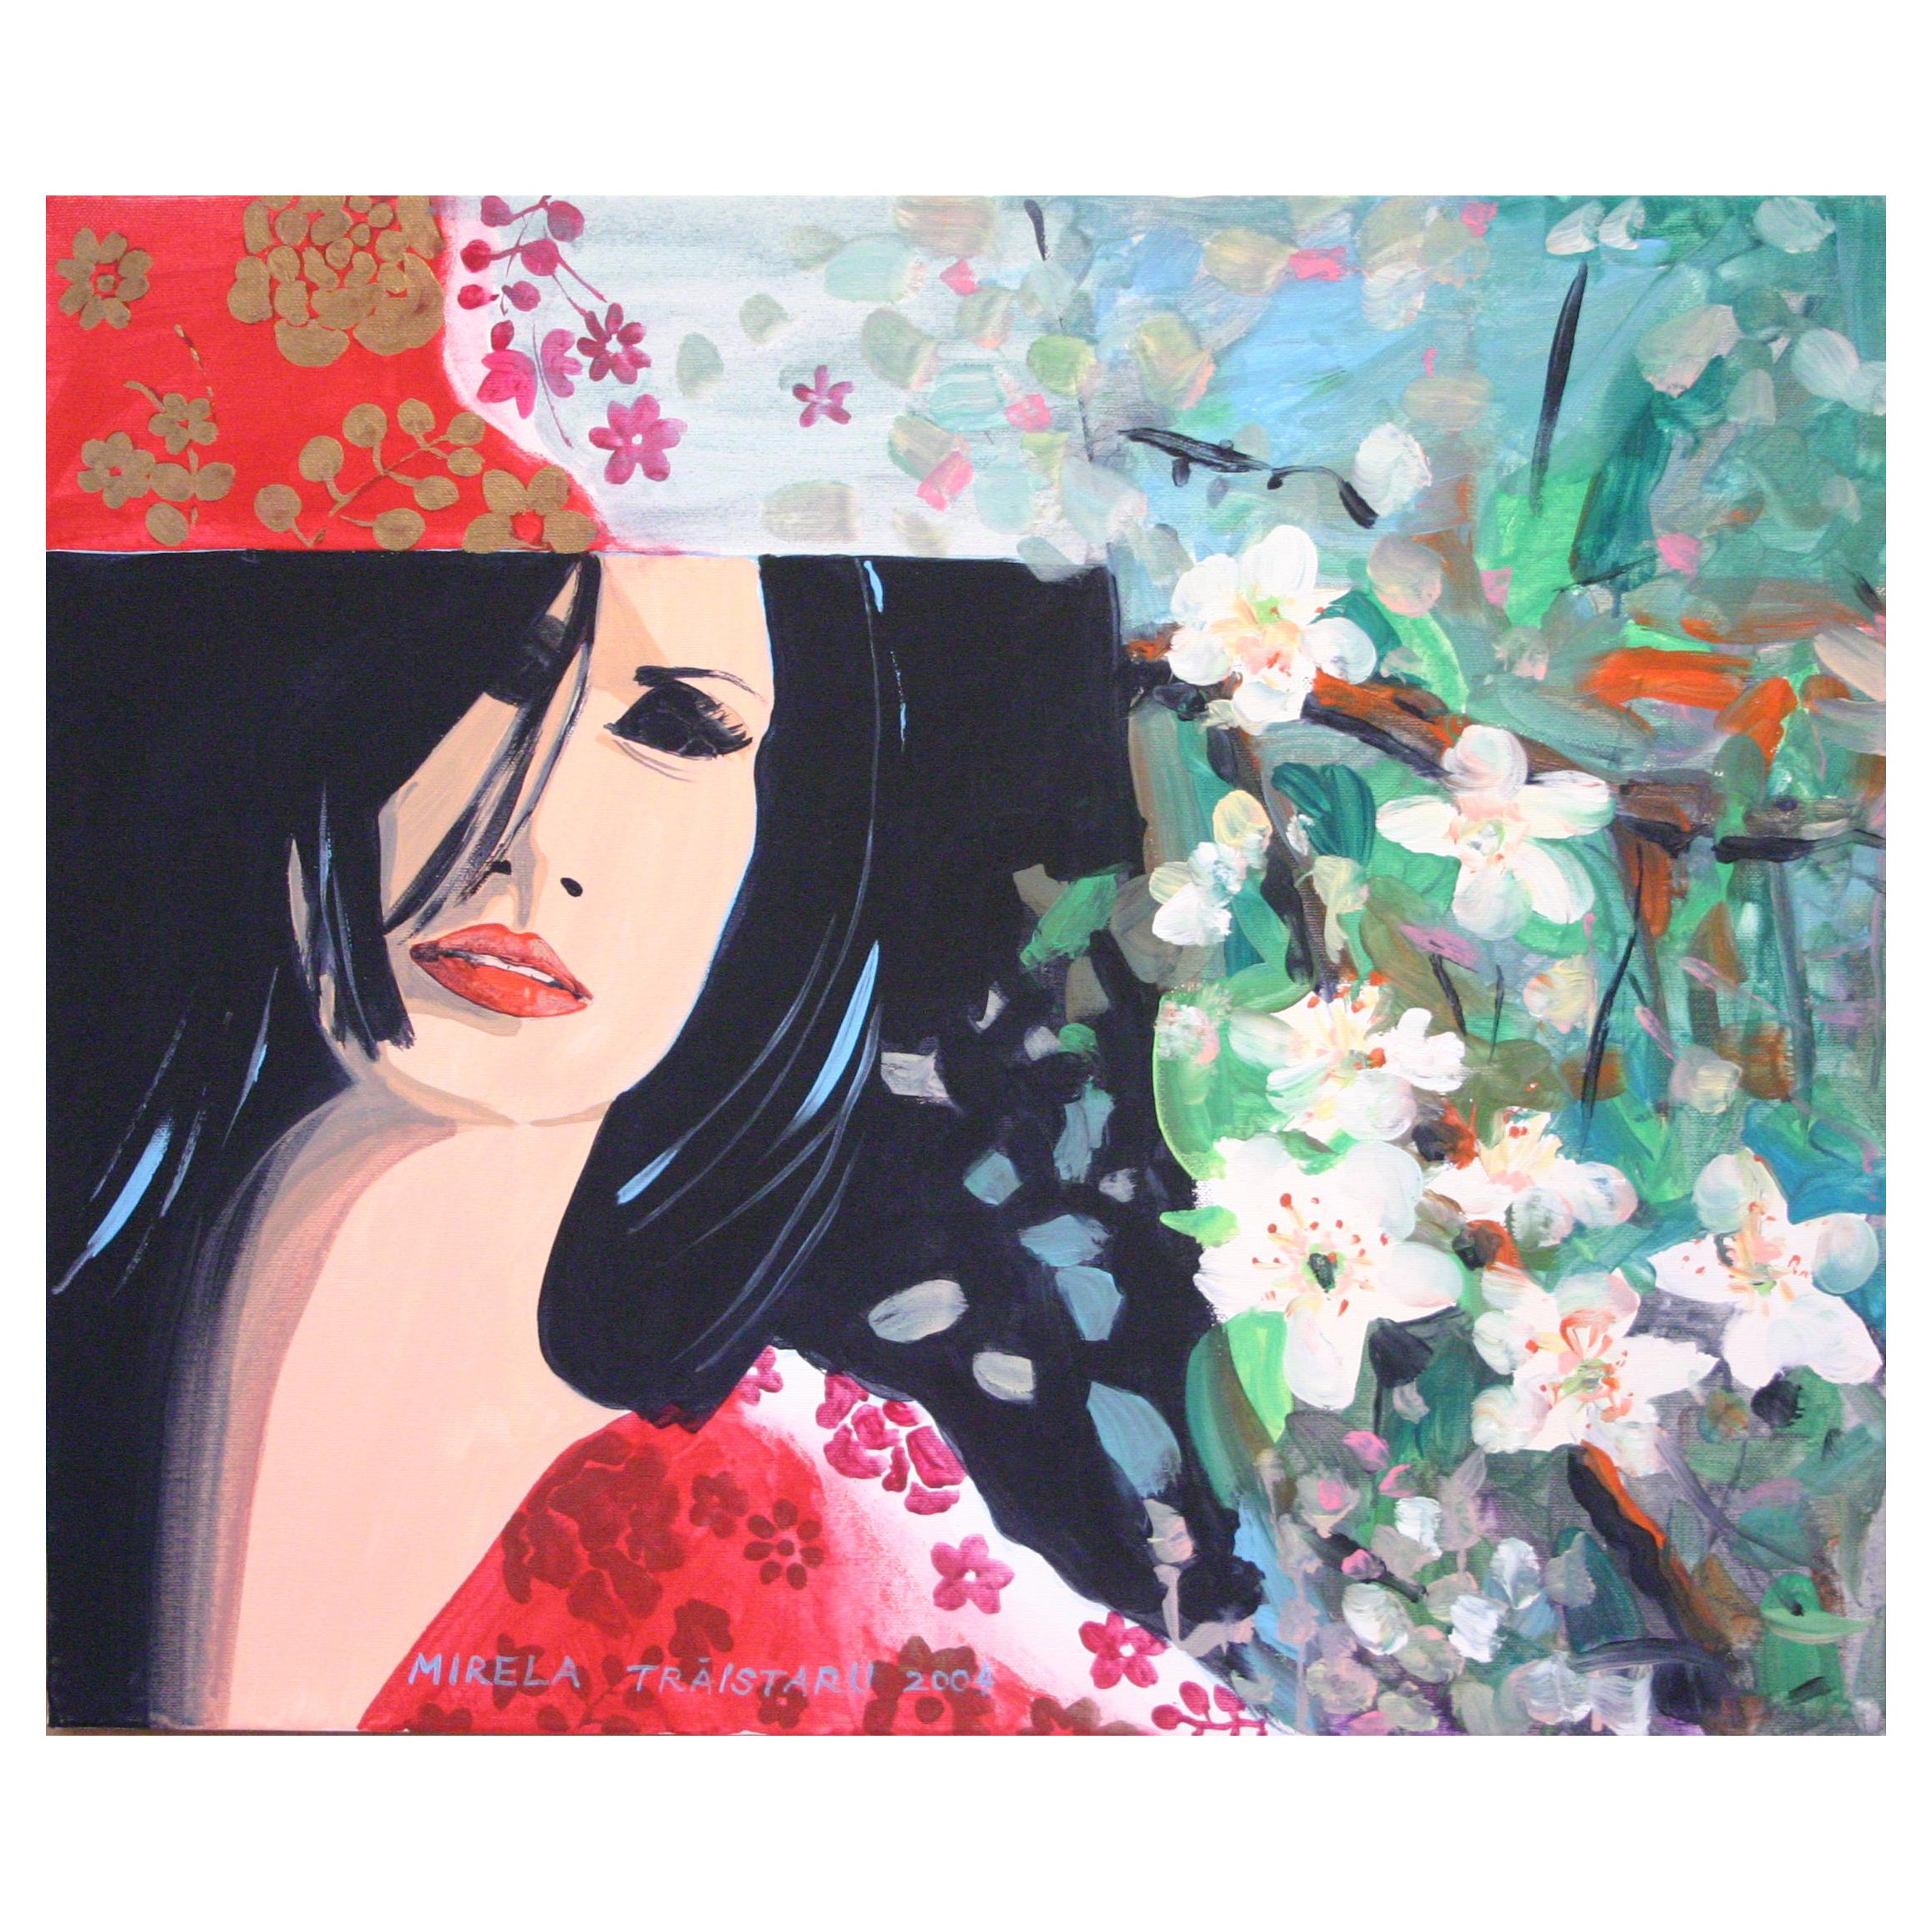 Mirela Trăistaru Figurative Painting - Paradise 04 - 21st Century, Flowers, Red, Human Figure, Landscape, Mood